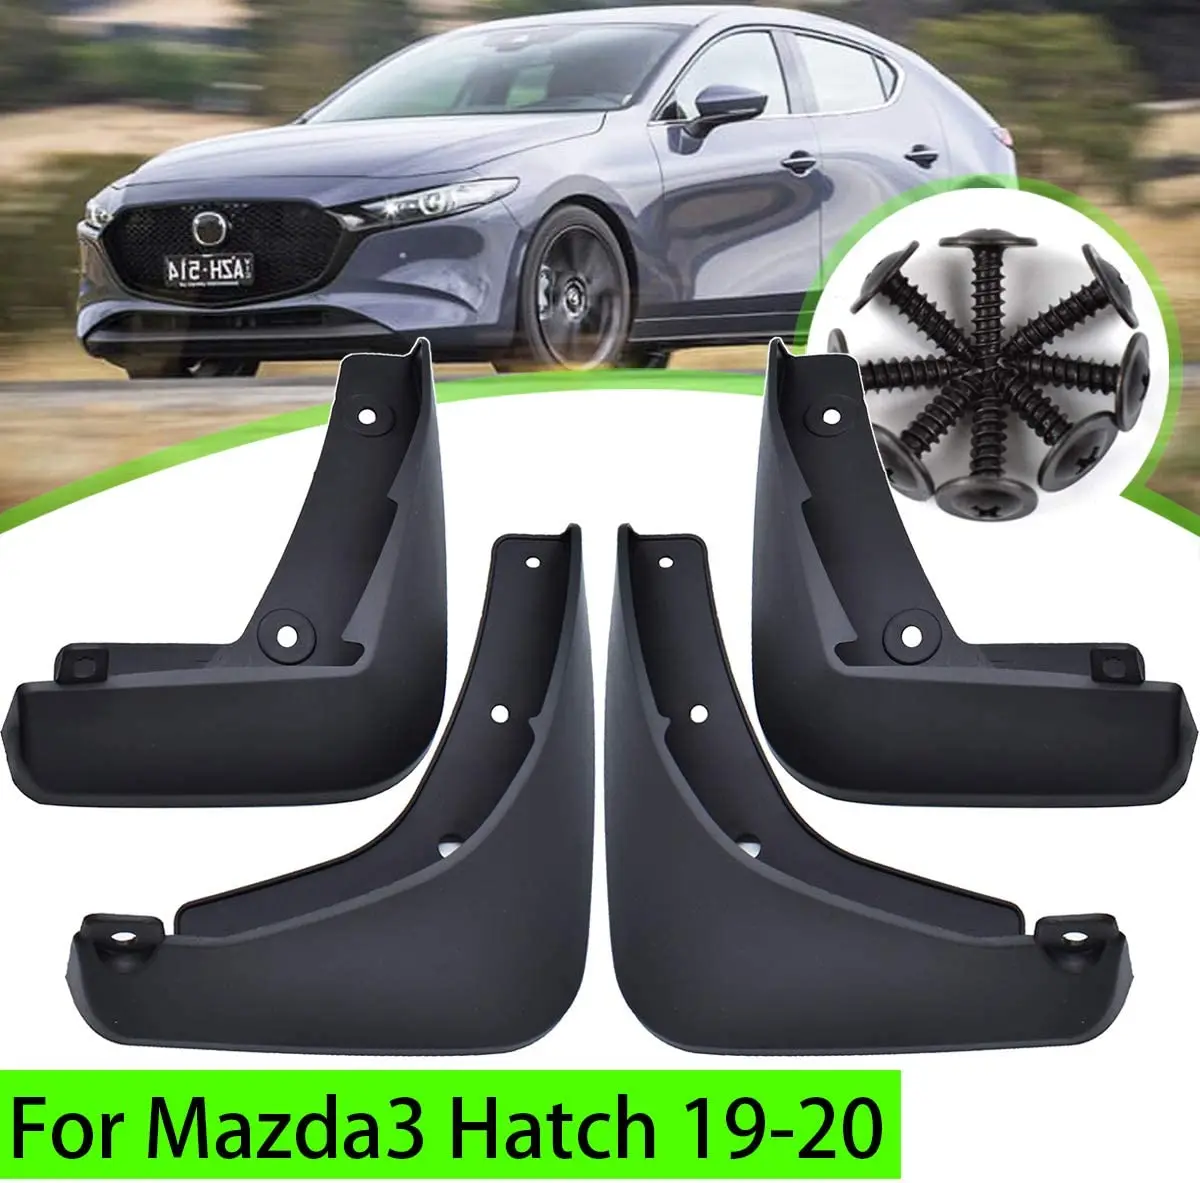 4PCS Mudflaps For Mazda 3 Mazda3 BP 2019 2020 Hatch Hatchback MudFlaps Splash Guards Mudguards Front Rear Fender Car Accessories